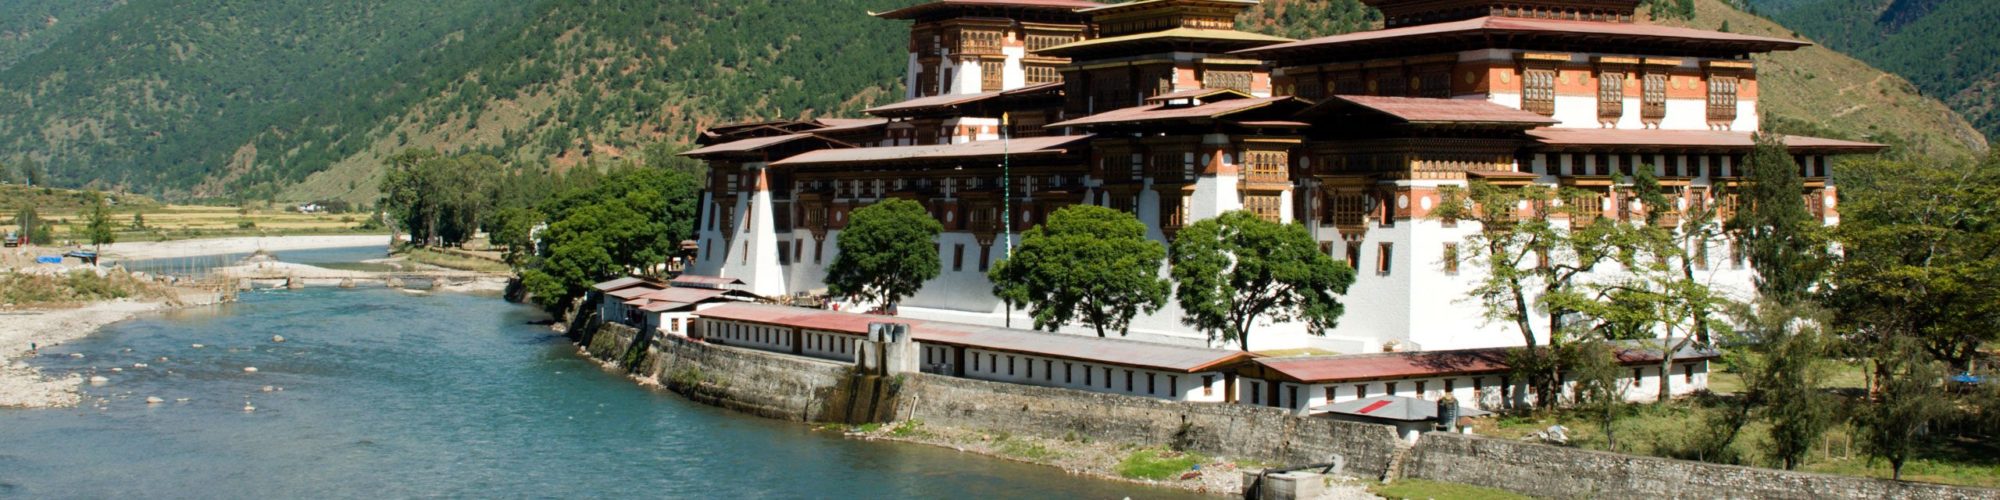 Punakha travel agents packages deals